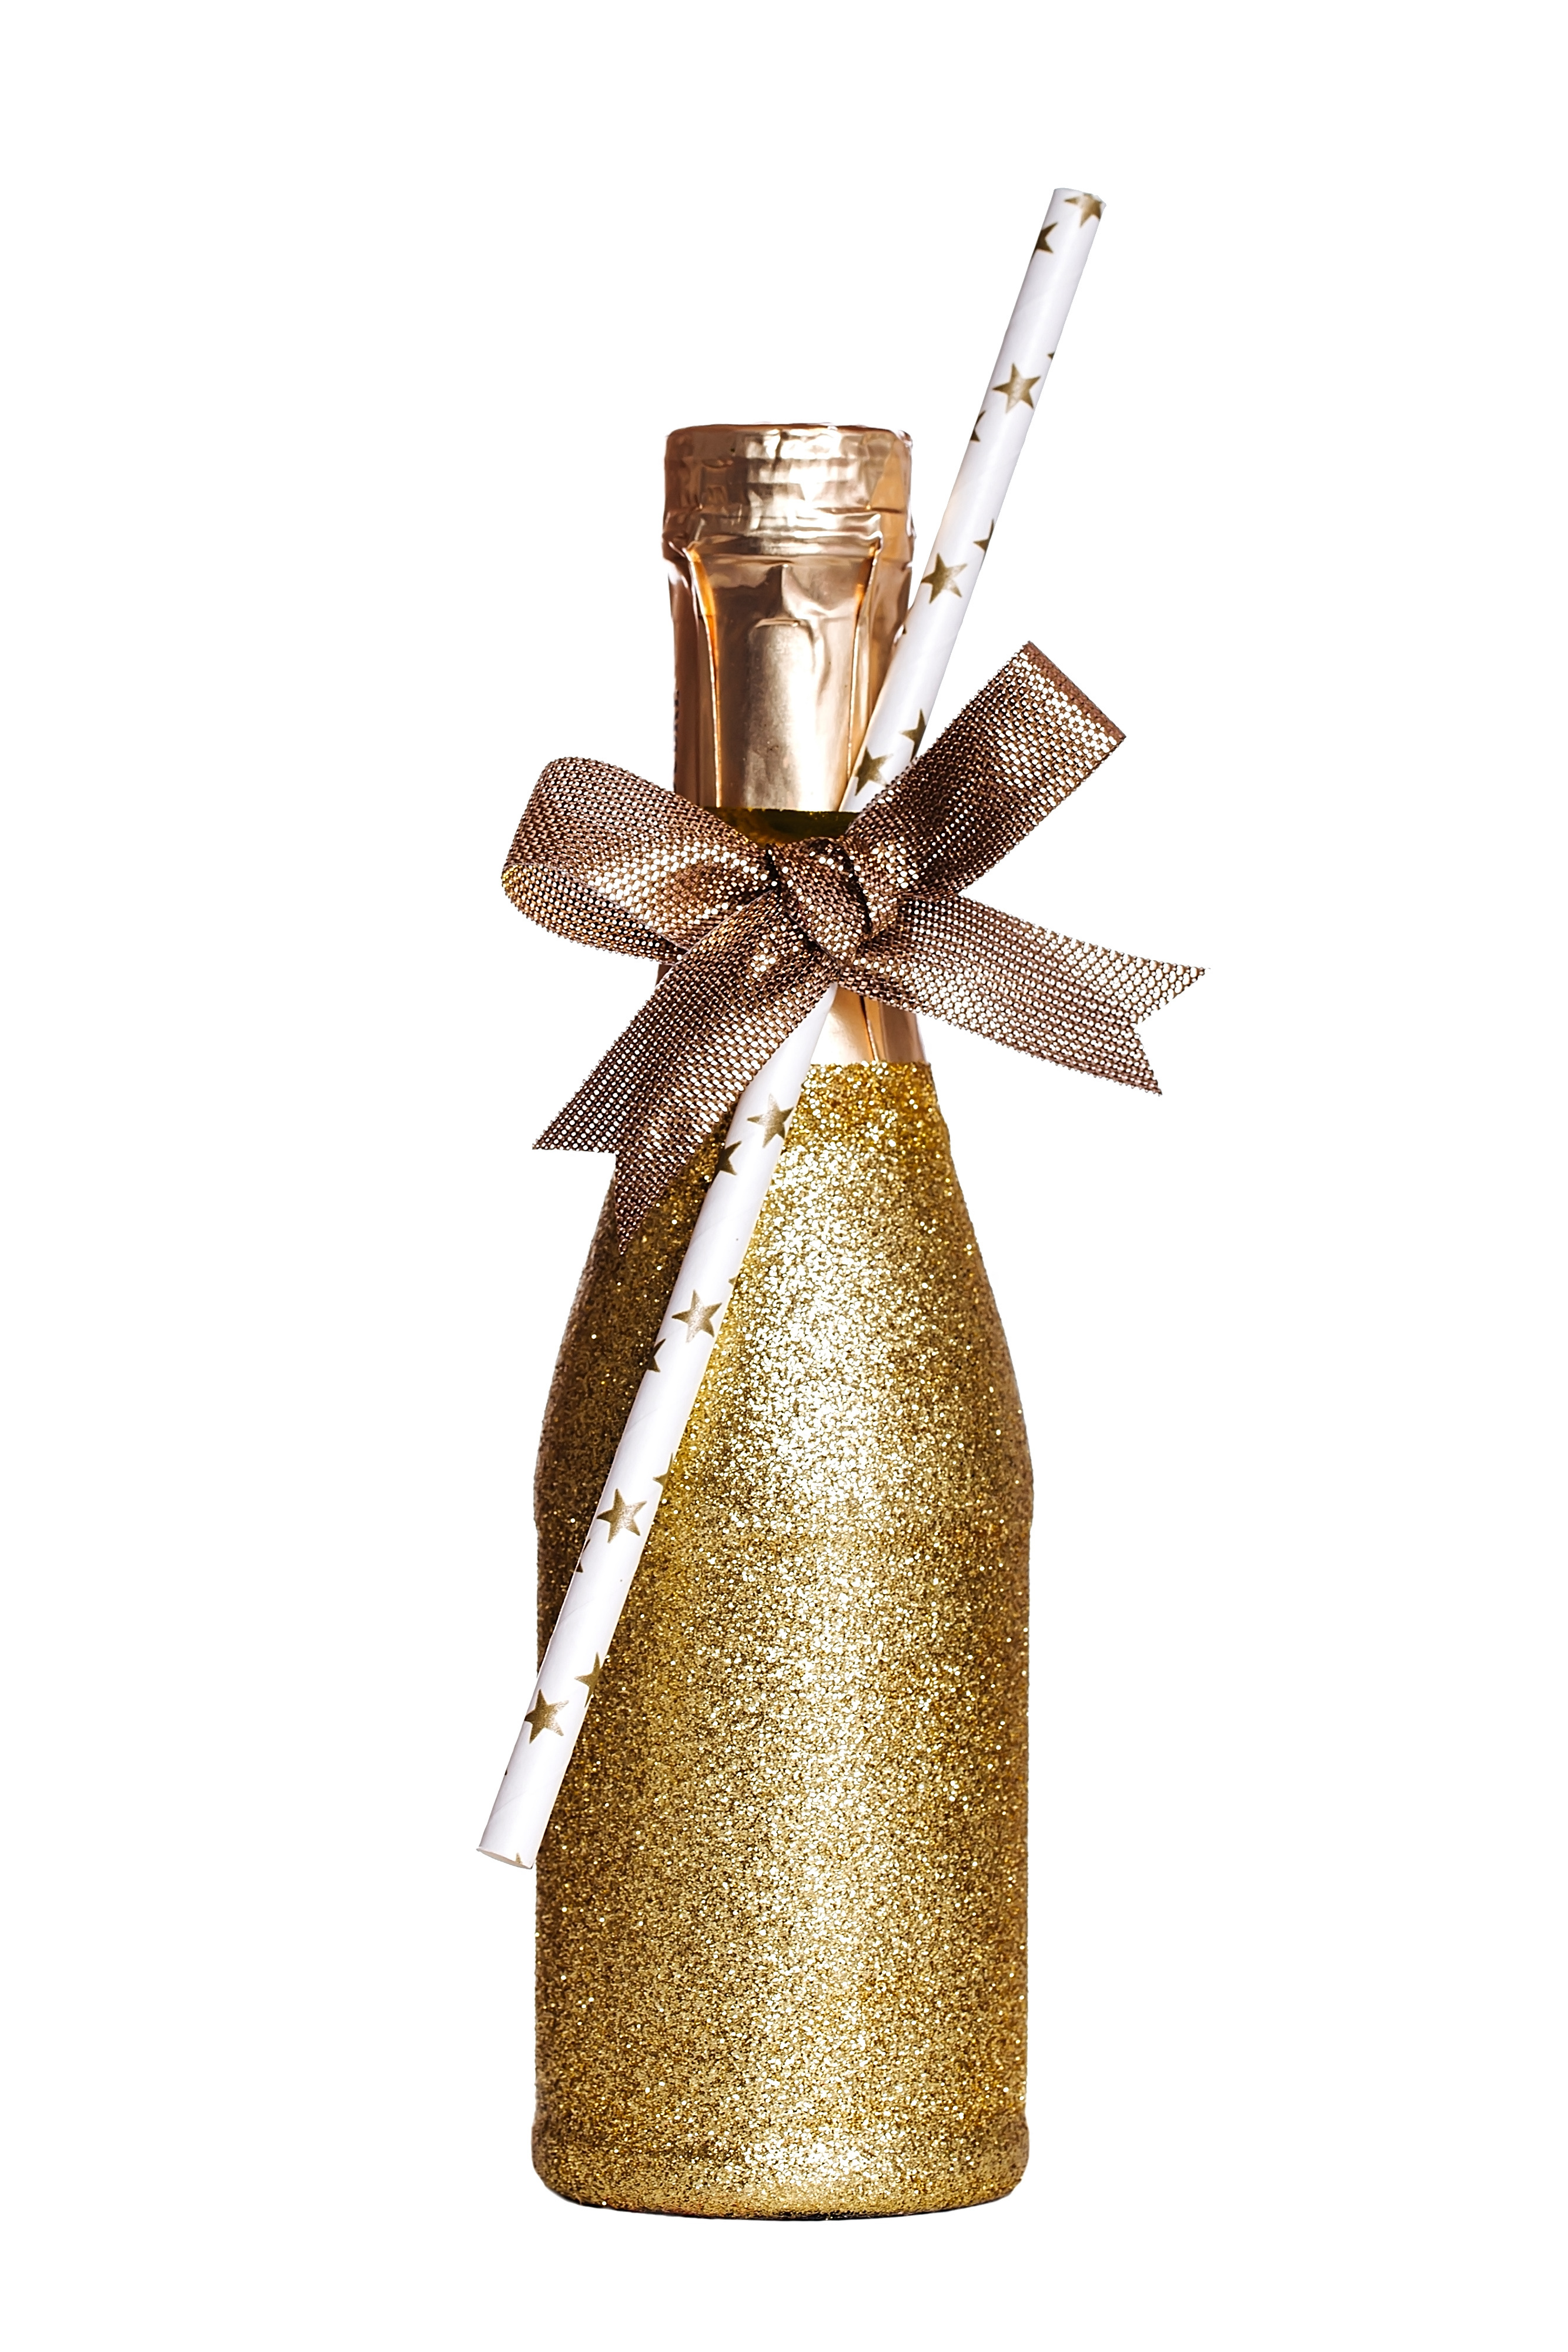 Glitter Champagne bottle for 1920s murder mystery party